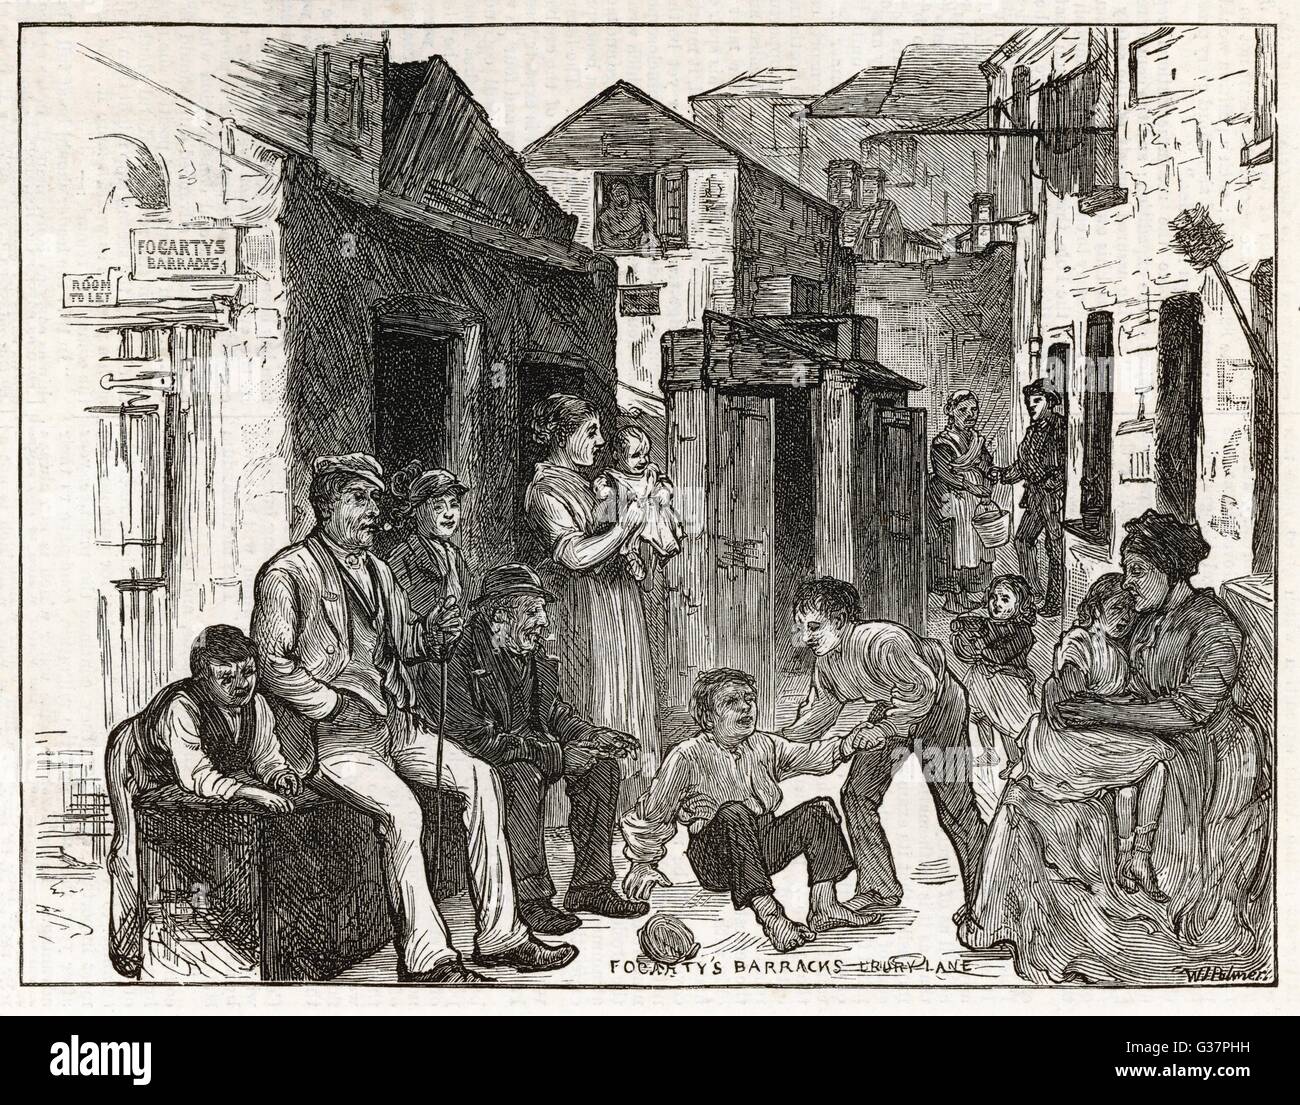 Street scene at Fogarty's  Barracks, Church Lane,  Bloomsbury, London        Date: 1875 Stock Photo